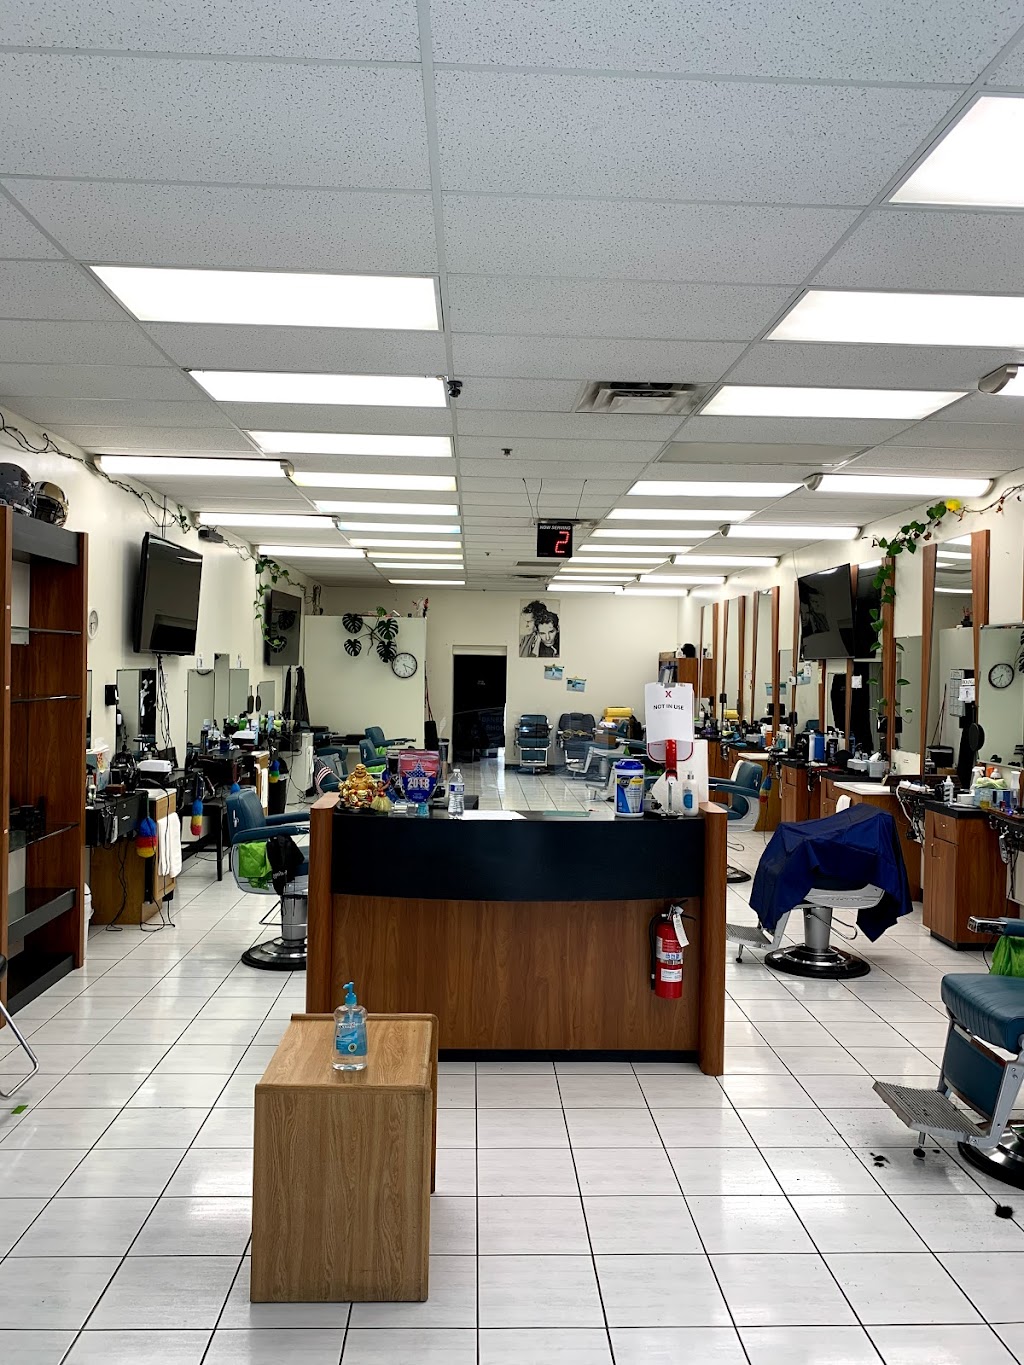 44th Avenue Barber Shop | 21005 44th Ave W Ste 104, Mountlake Terrace, WA 98043, USA | Phone: (425) 776-6605